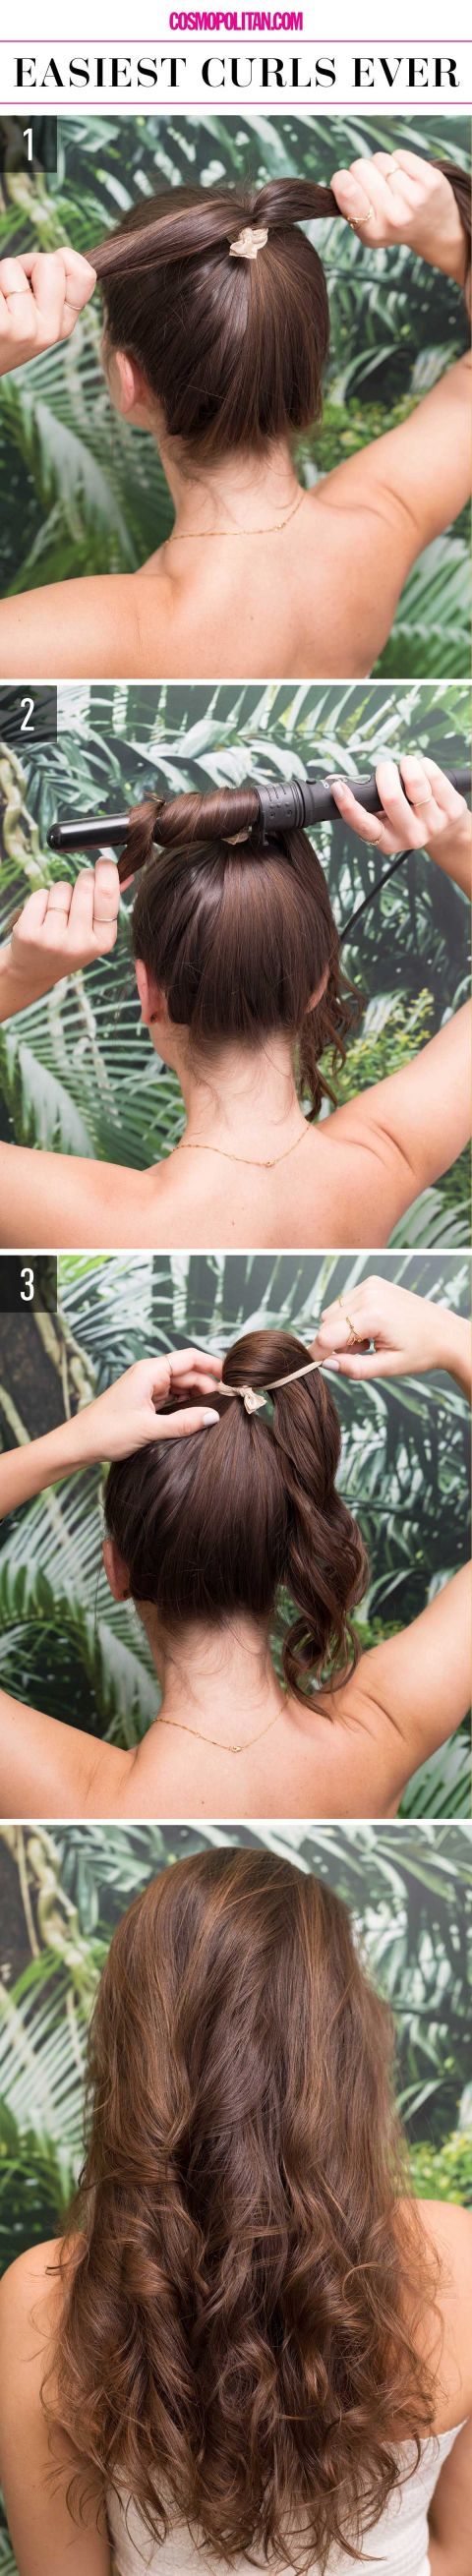 easy way to get curls over